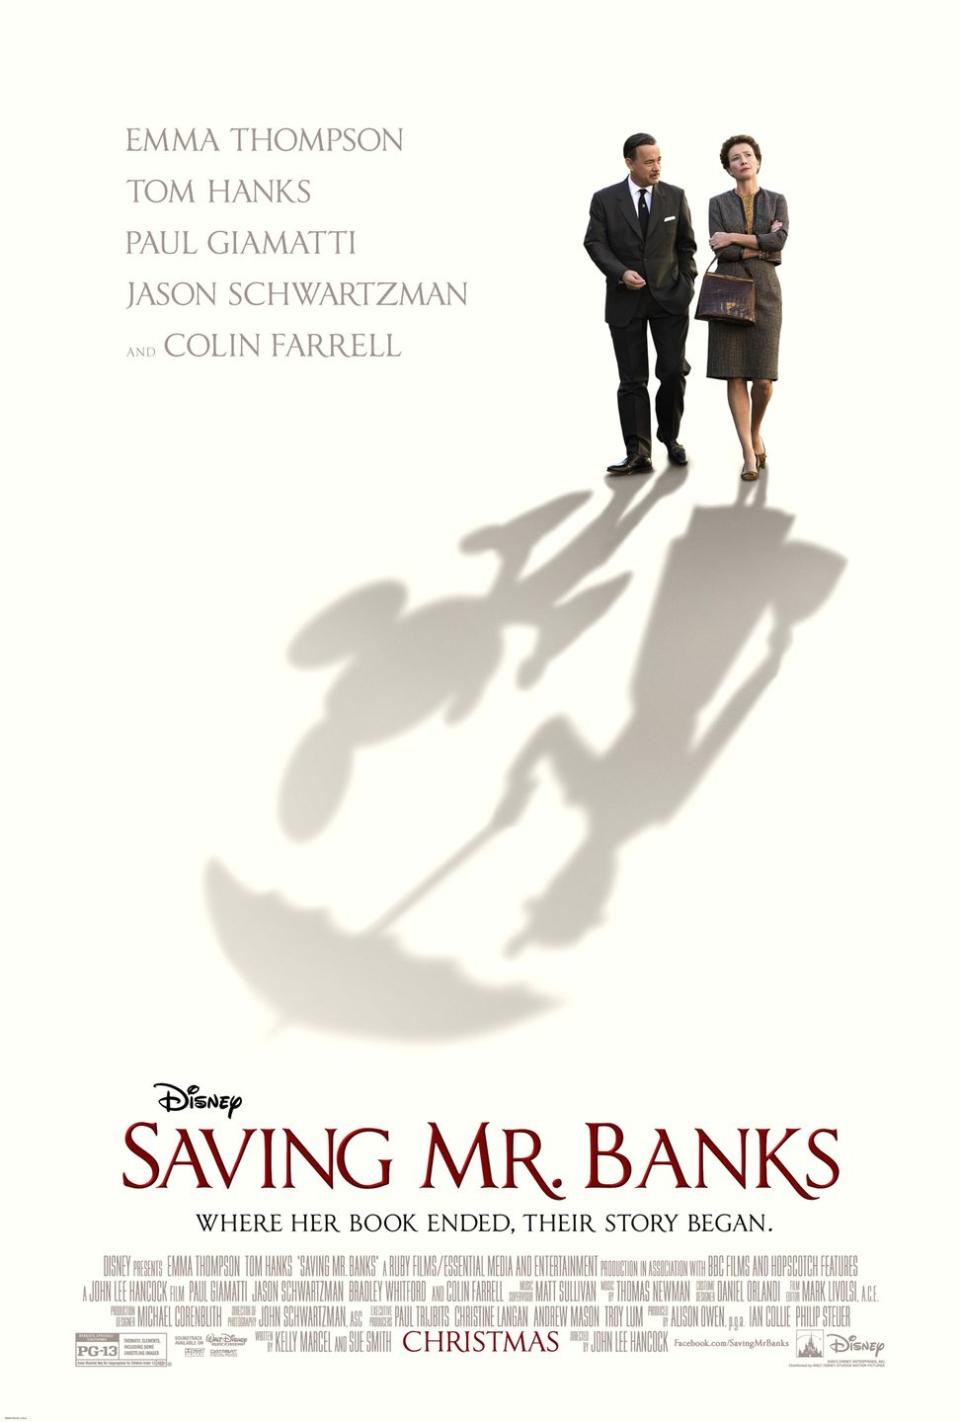 5) Saving Mr. Banks